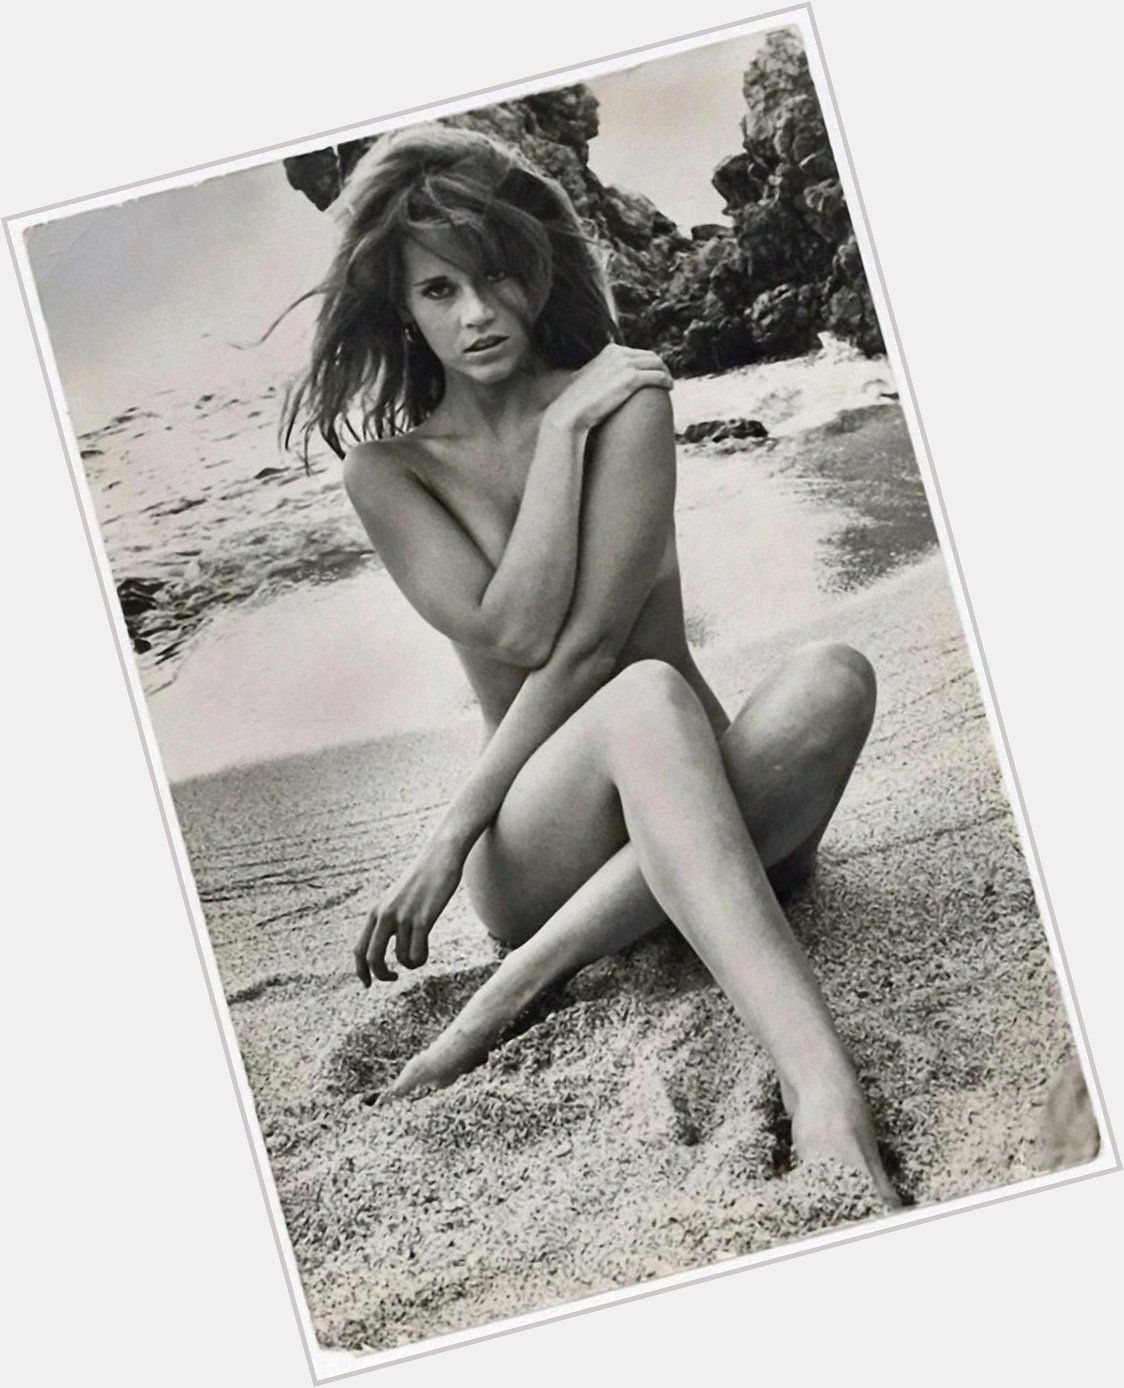 Happy 85th Birthday to Jane Fonda seen here posing on the beach in 1968 